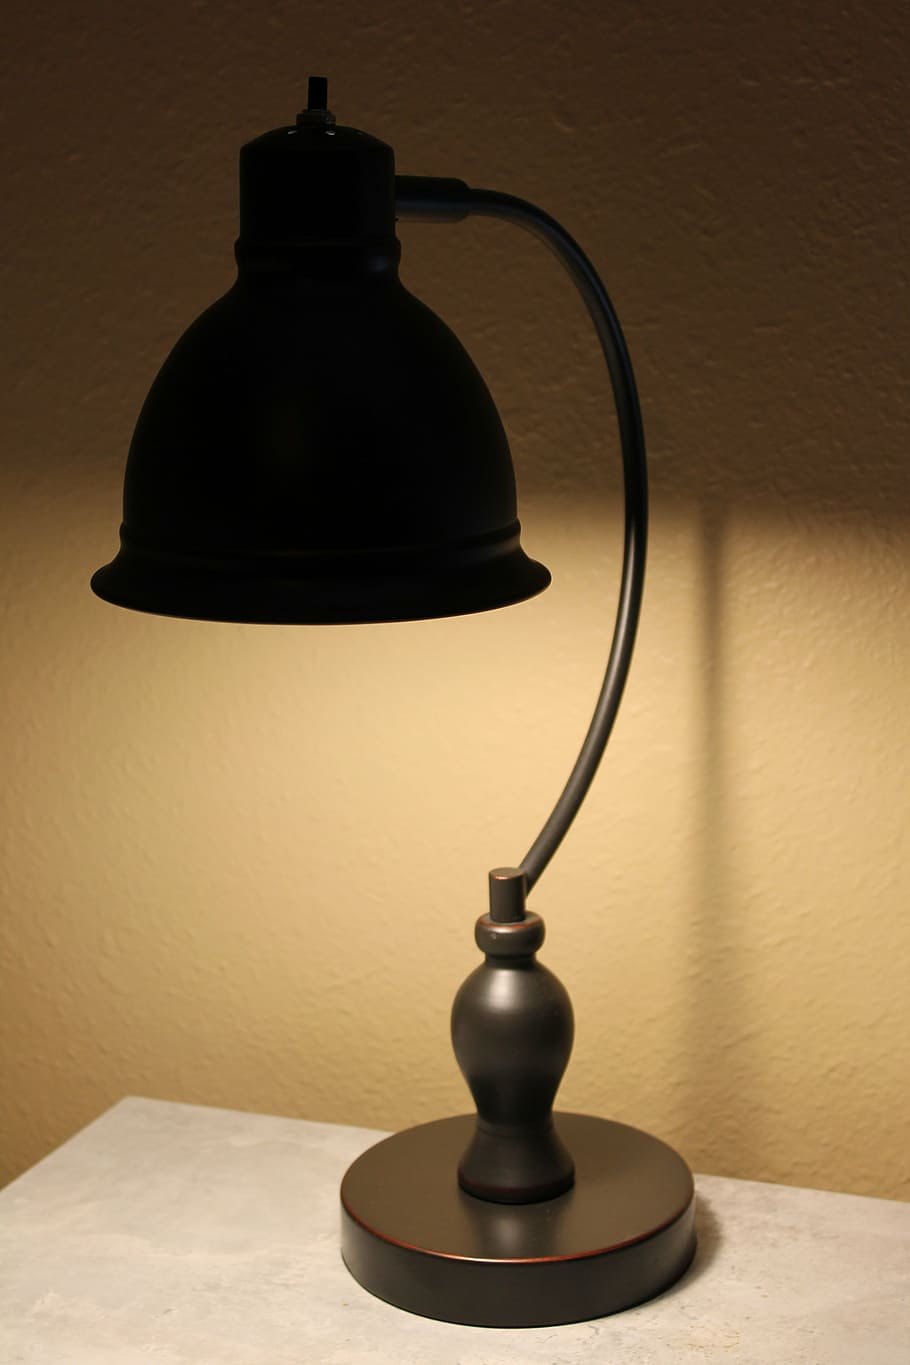 black table lamp, lamp, table lamp, light, reading, home, retro, design, night, vintage